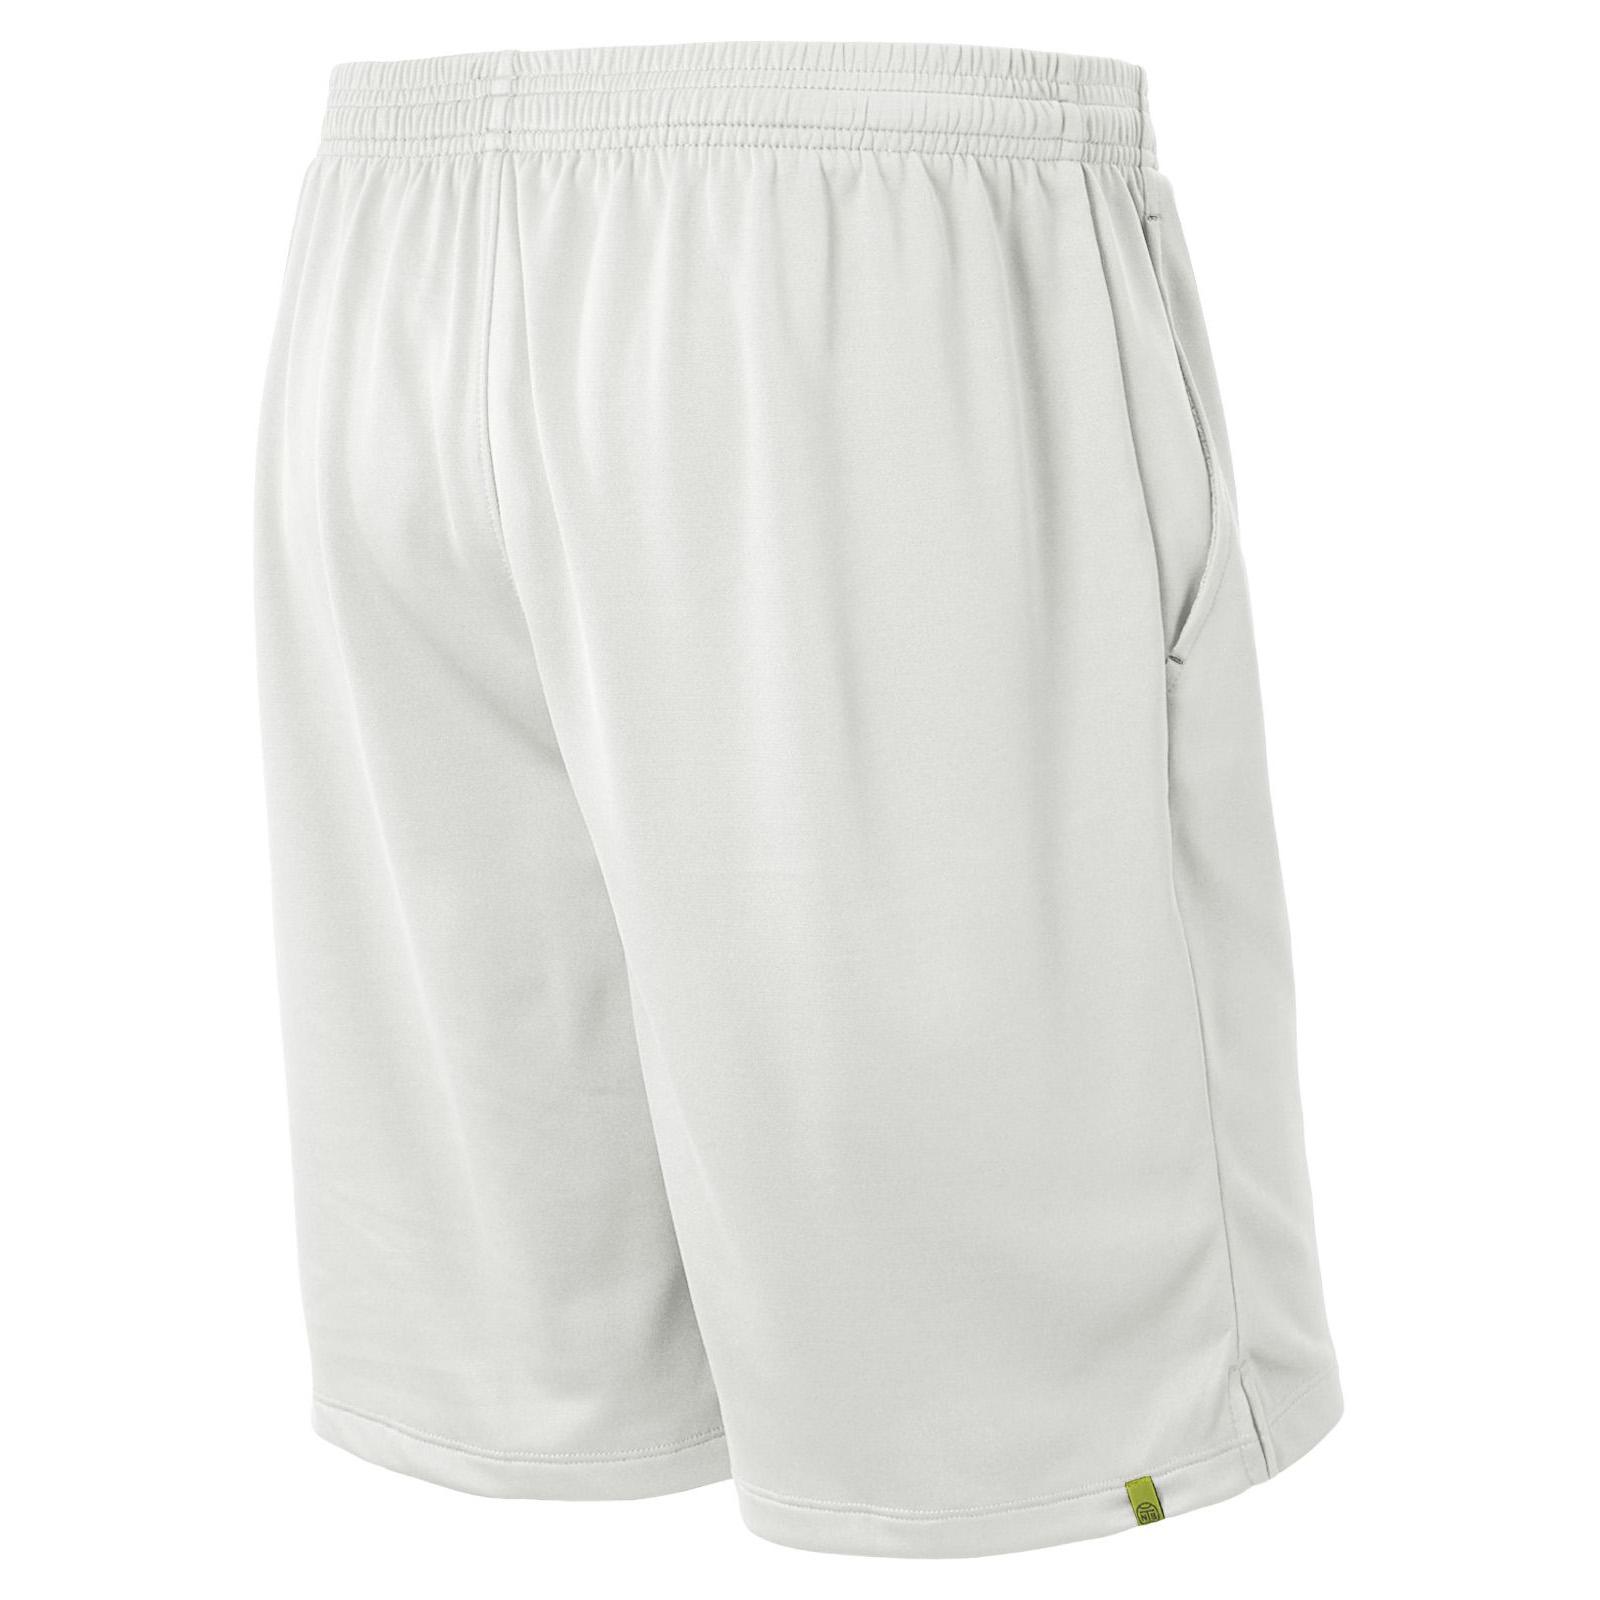 New Balance Mens Baseline 9 Inch Shorts - White - Tennisnuts.com